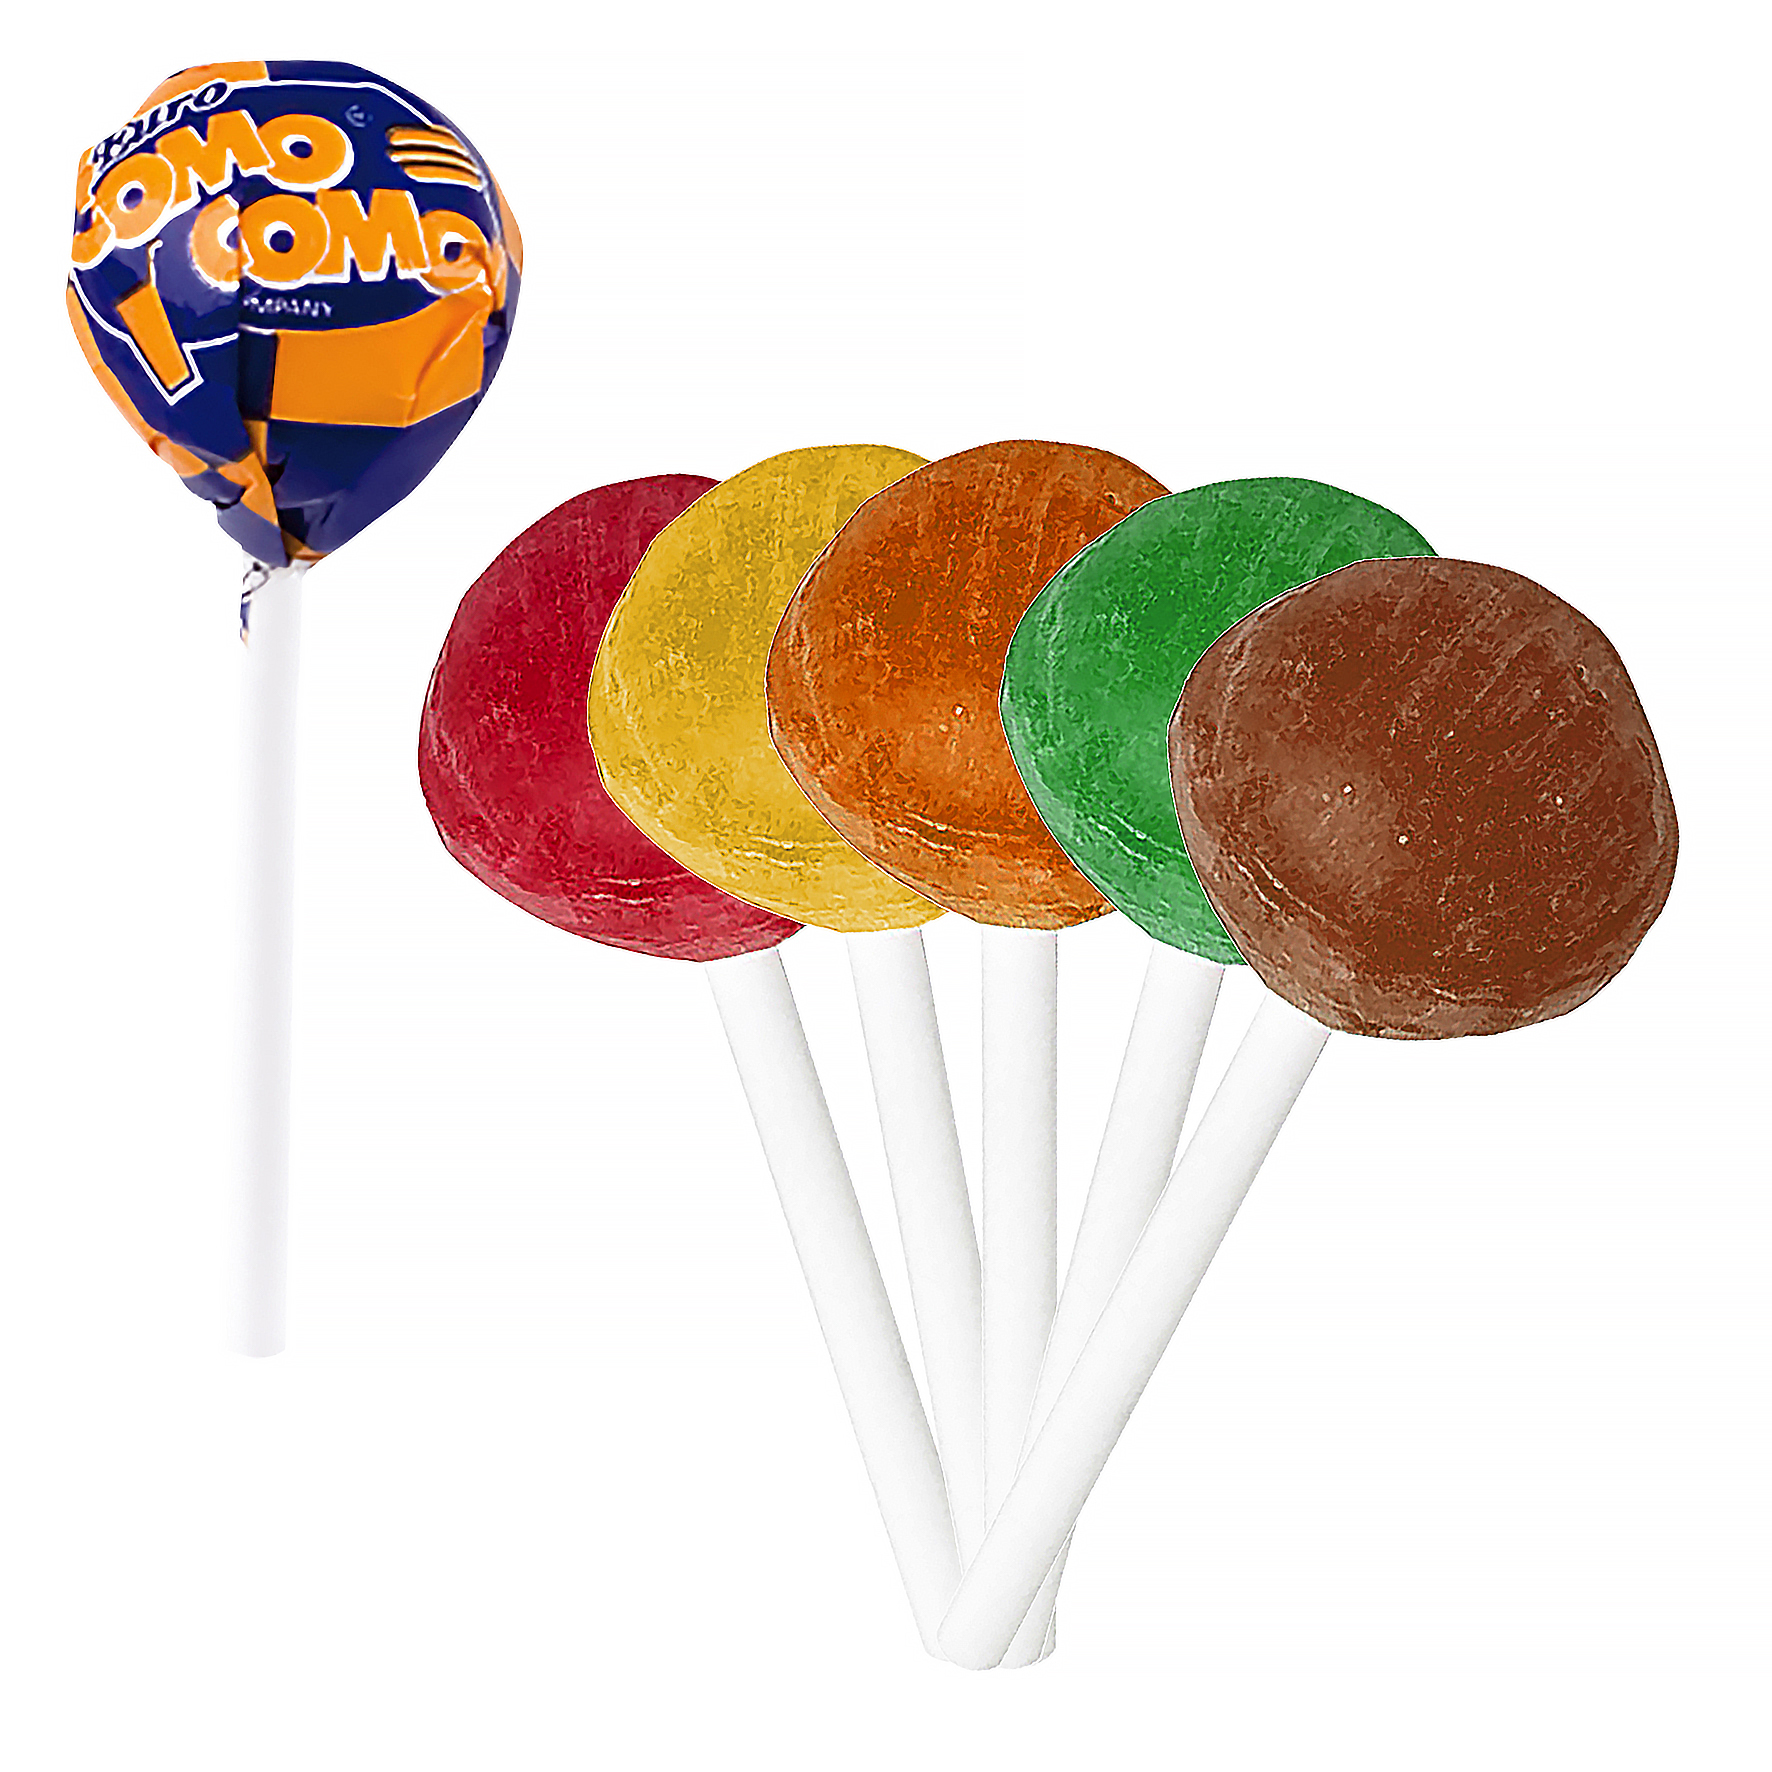 c 0040 00 09 - Classic flavoured ball lollipop